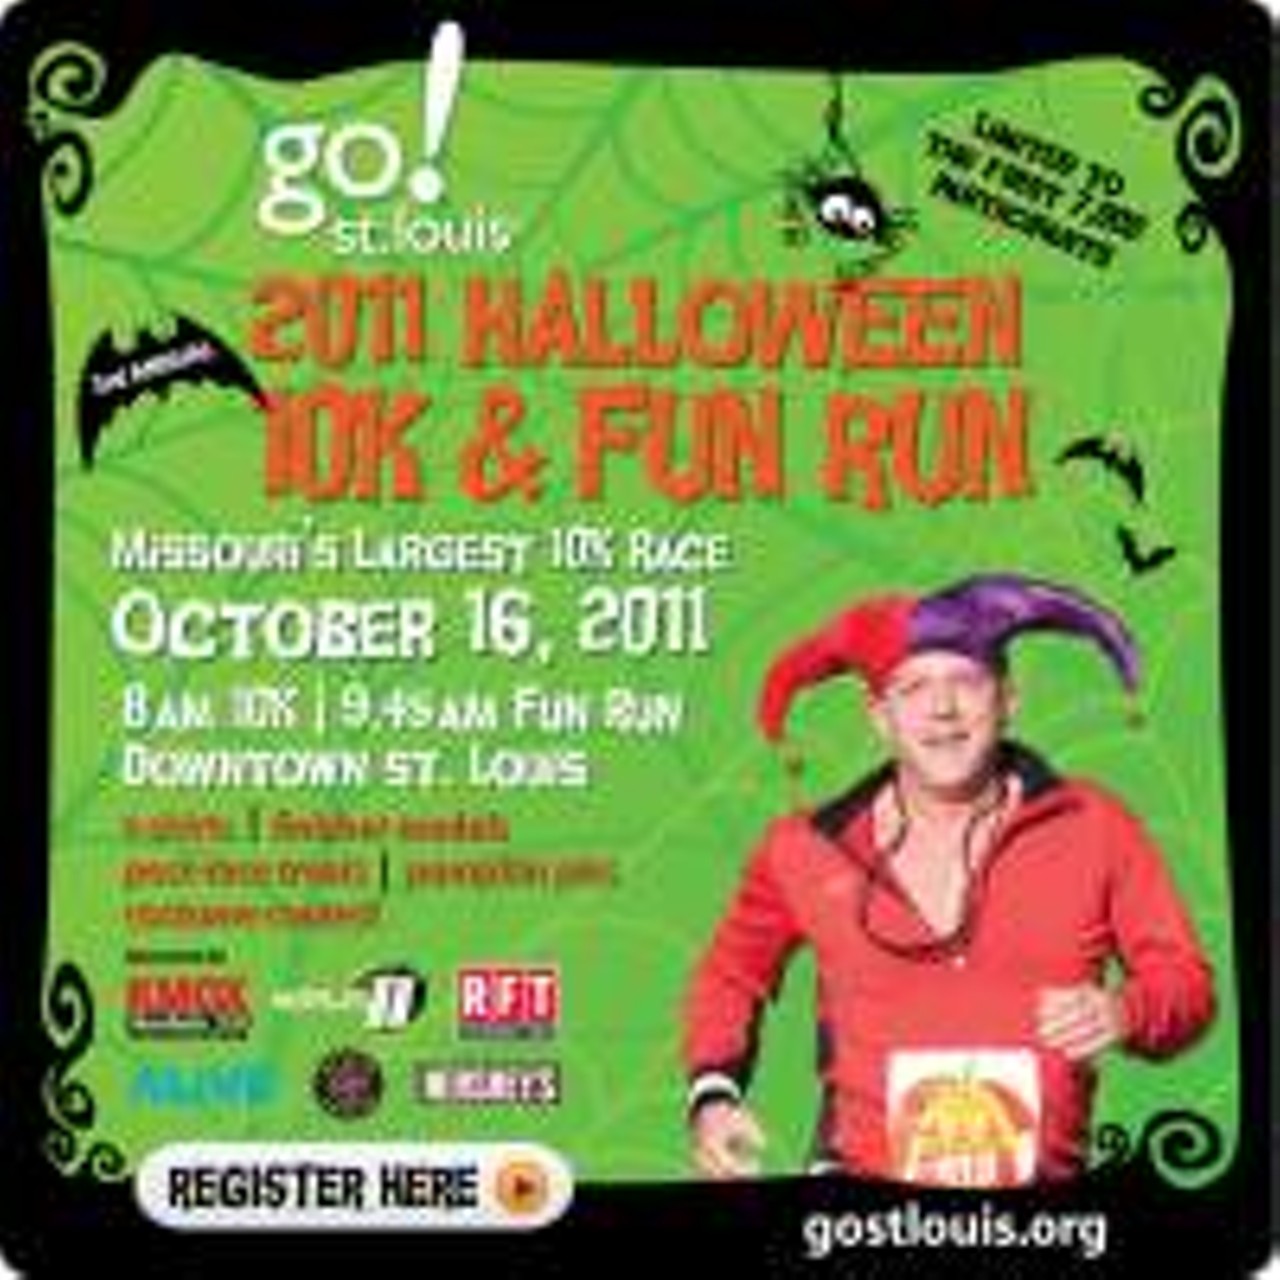 GO! St. Louis Halloween 10k & Fun Run